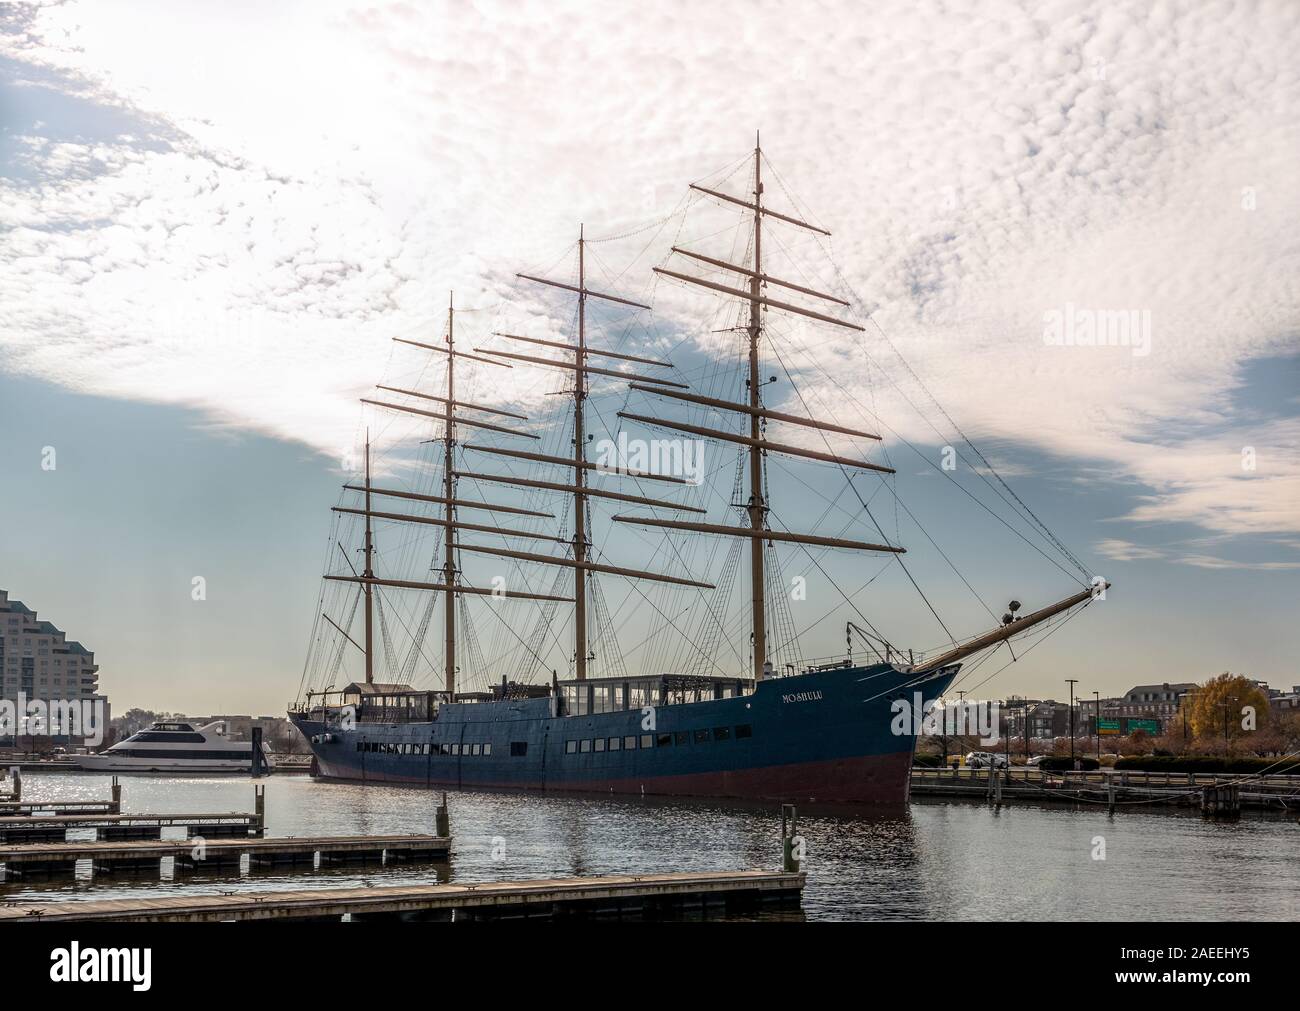 Philadelphia, Pennsylvania - November 25, 2019: Tall ship docked at the waterfront in Philadelphia, Pennsylvania Stock Photo